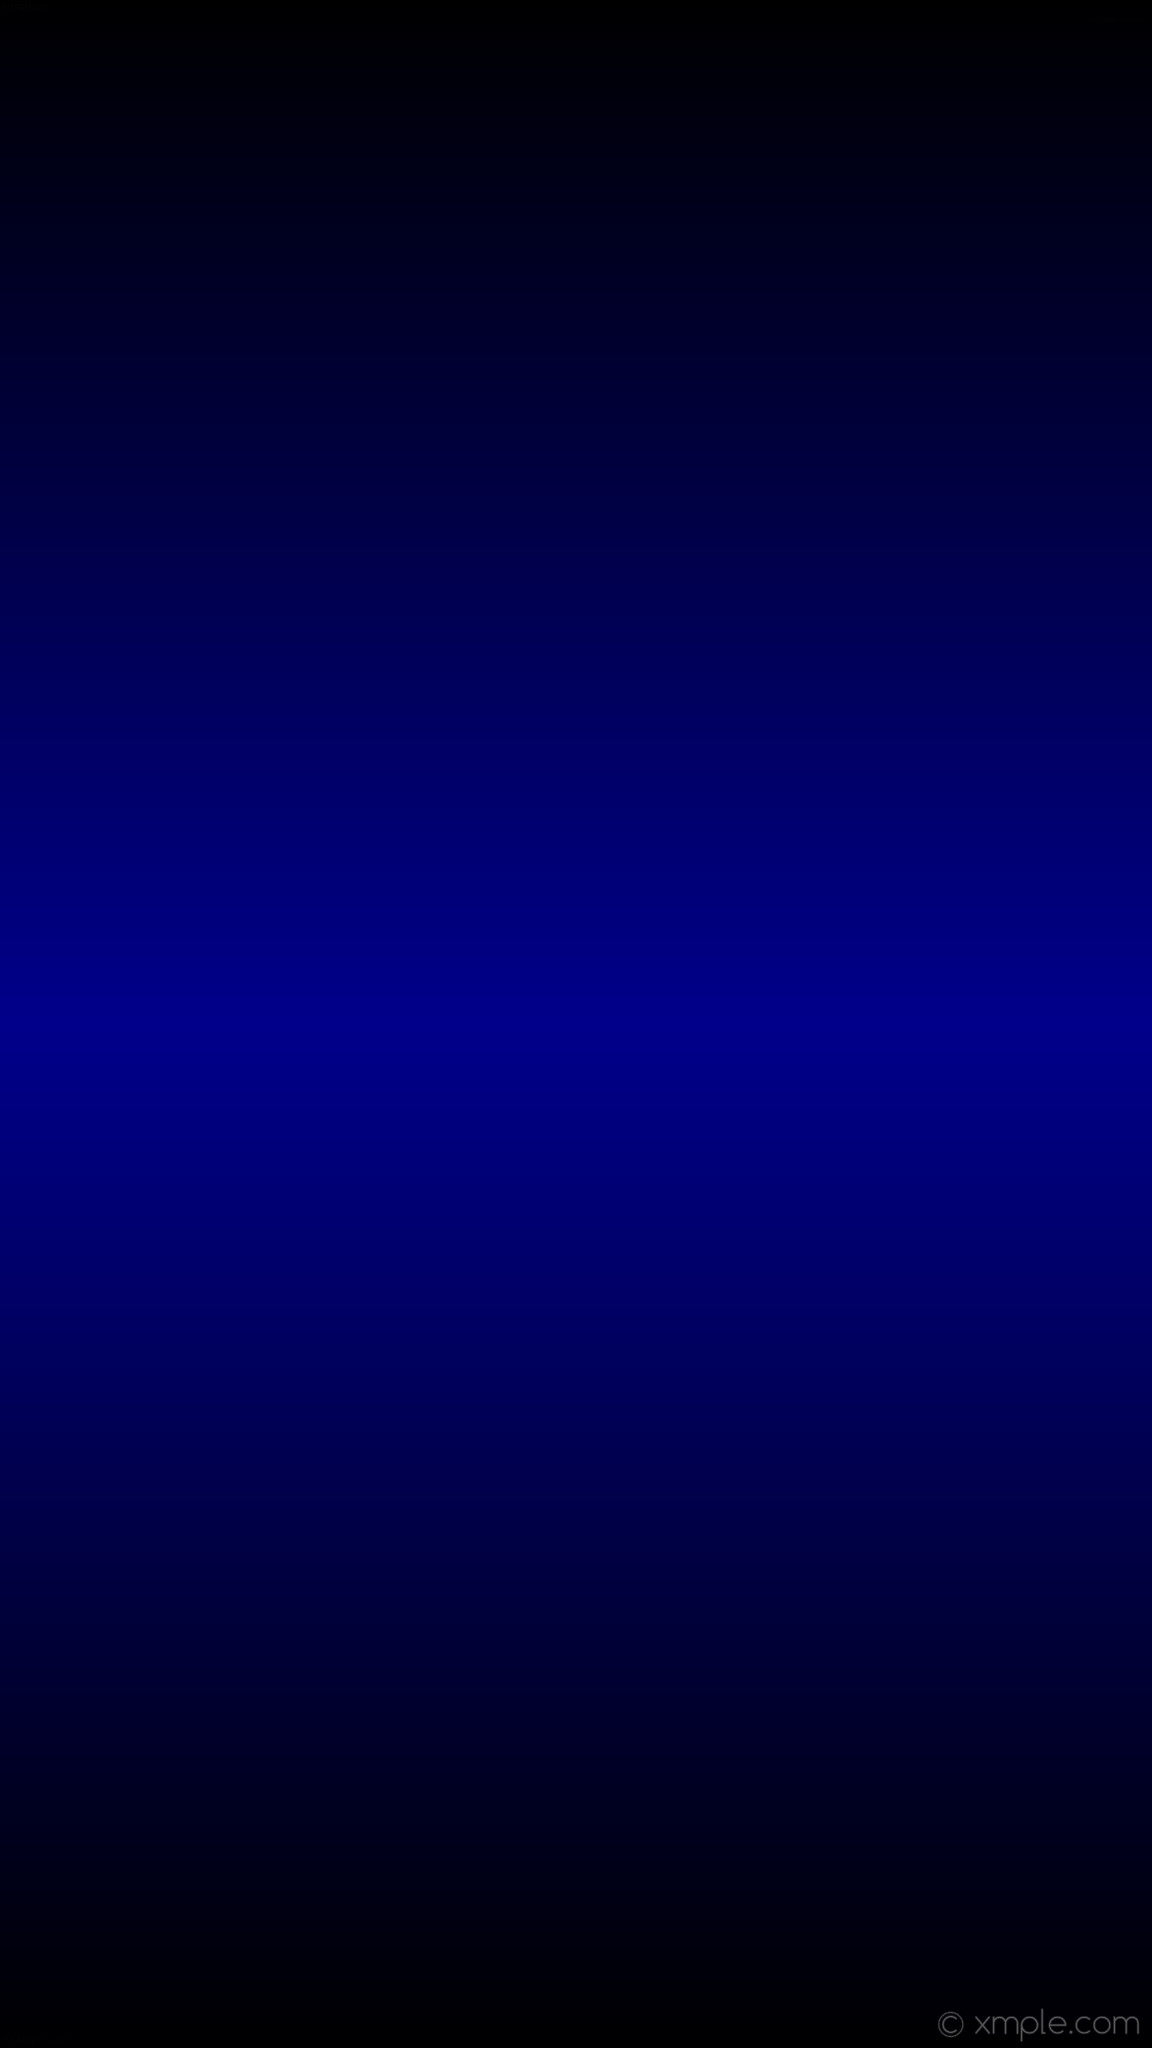 1152x2048 wallpaper linear black highlight blue gradient dark blue #000000 #00008b  270Â° 50%